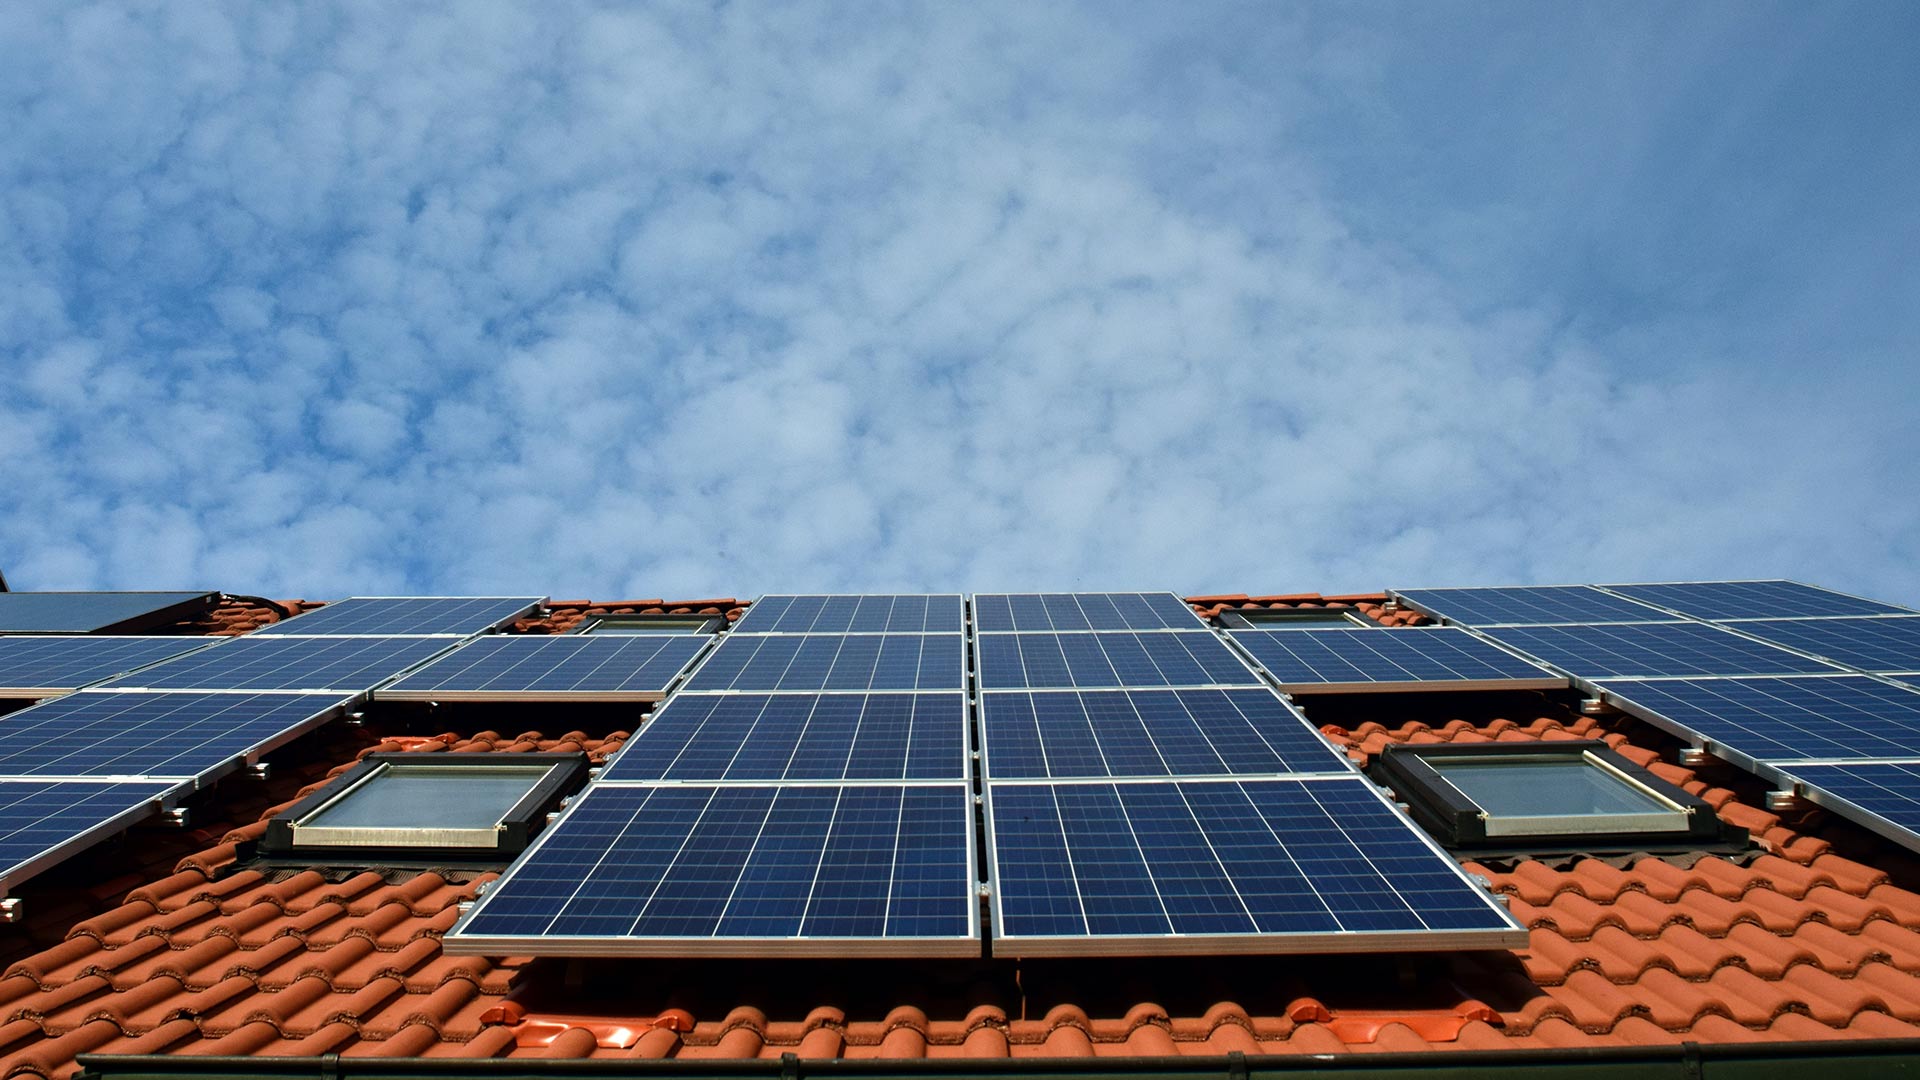 A solar panel array on a rooftop.